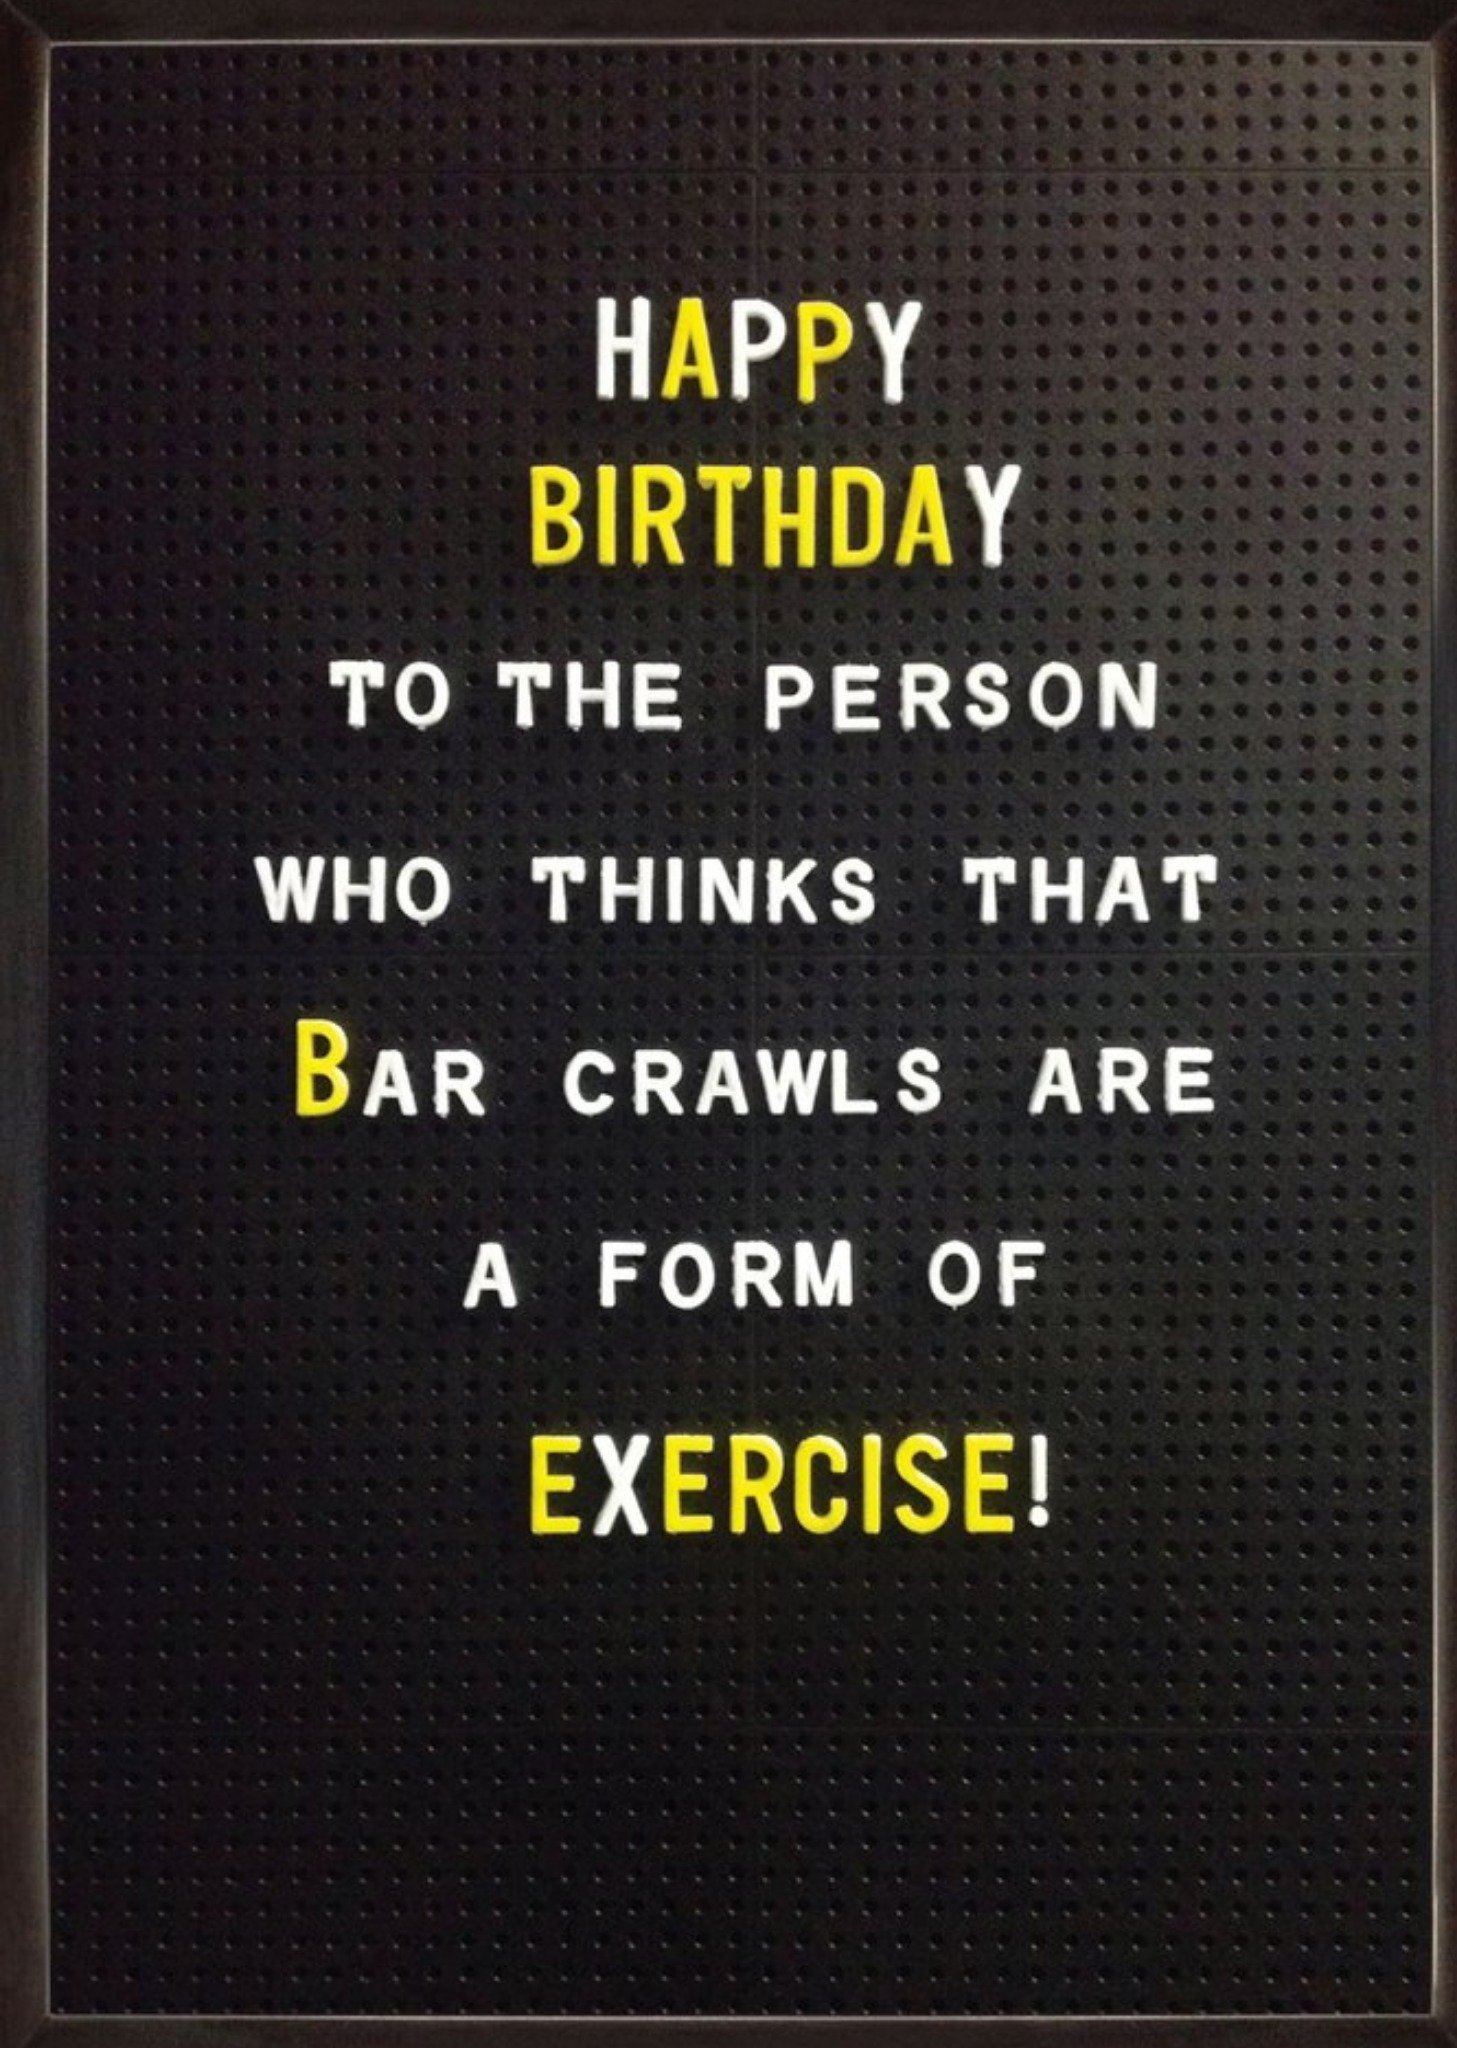 Brainbox Candy Funny Bar Crawls Form Of Exercise Birthday Card Ecard